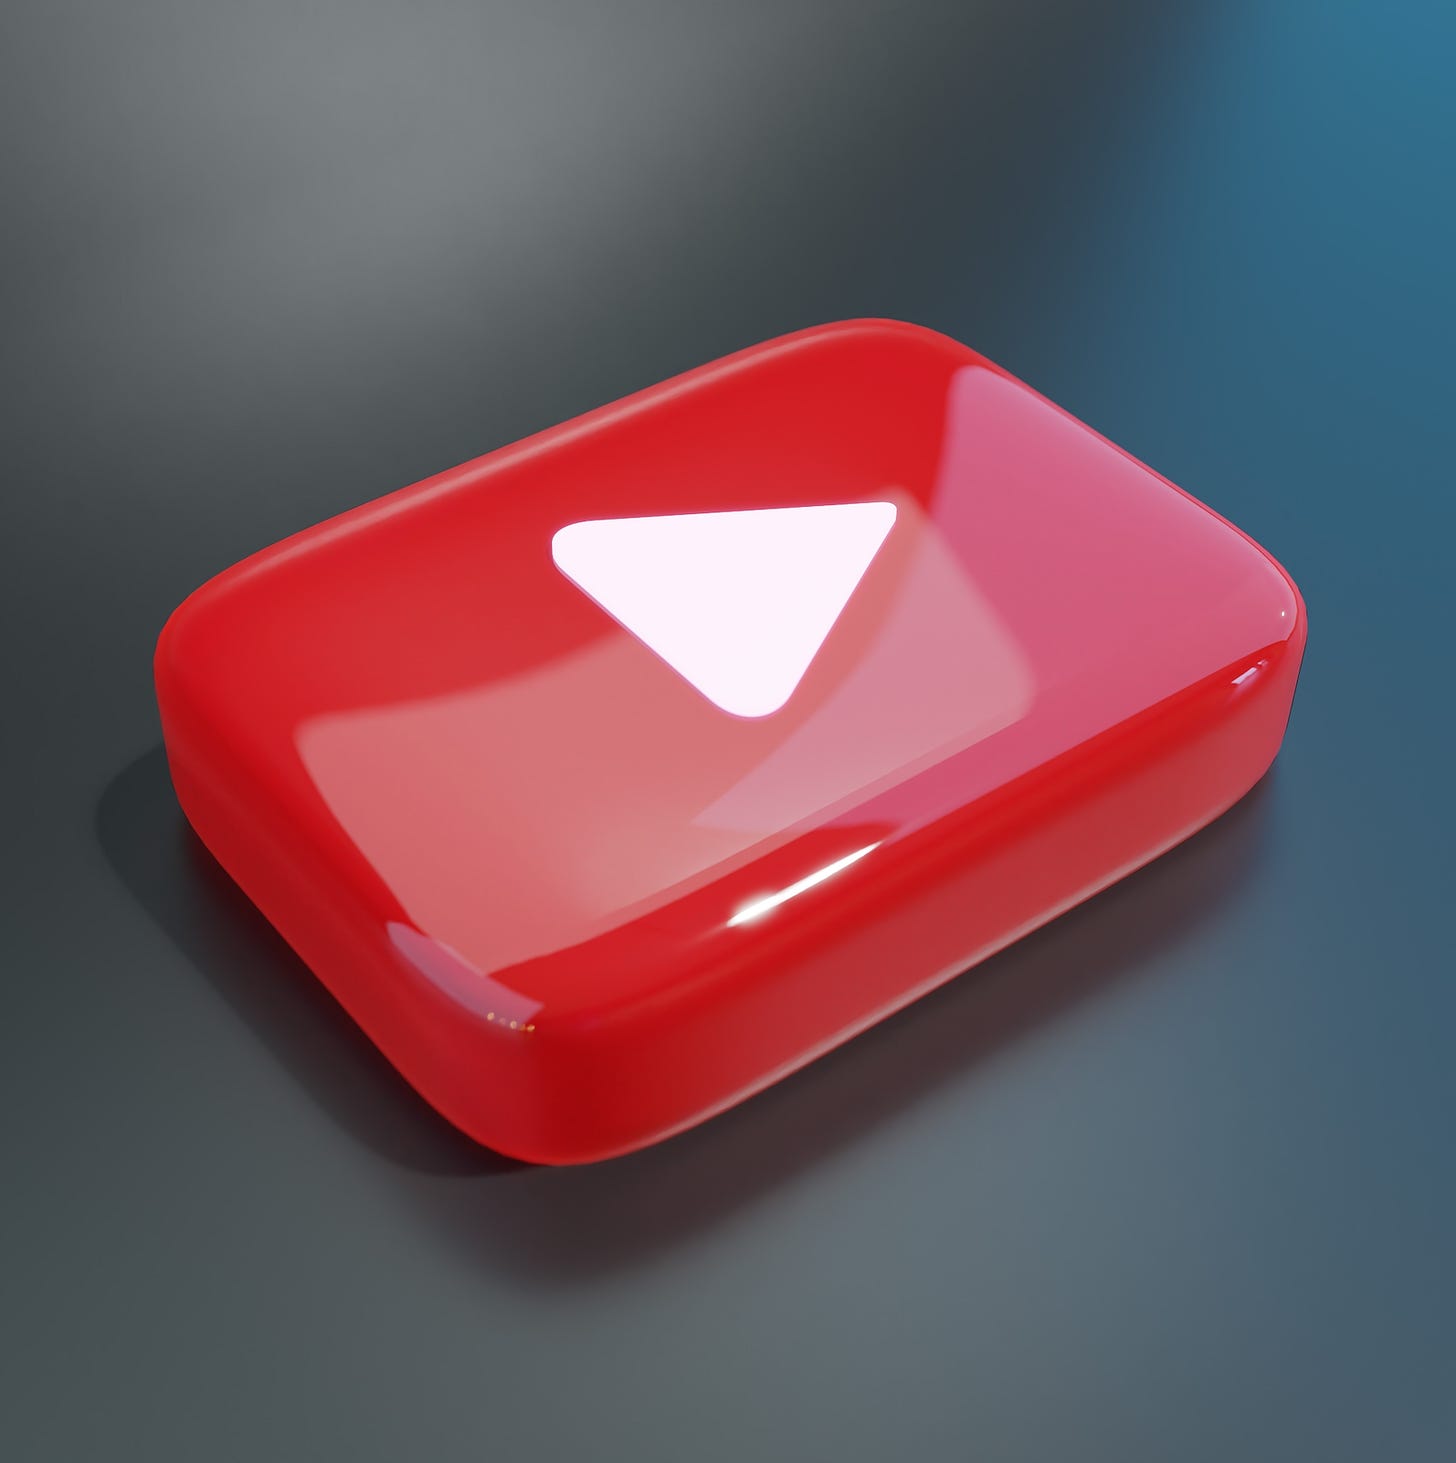 Creative interpretation of a YouTube play button by Eyestetix Studio on Unsplash